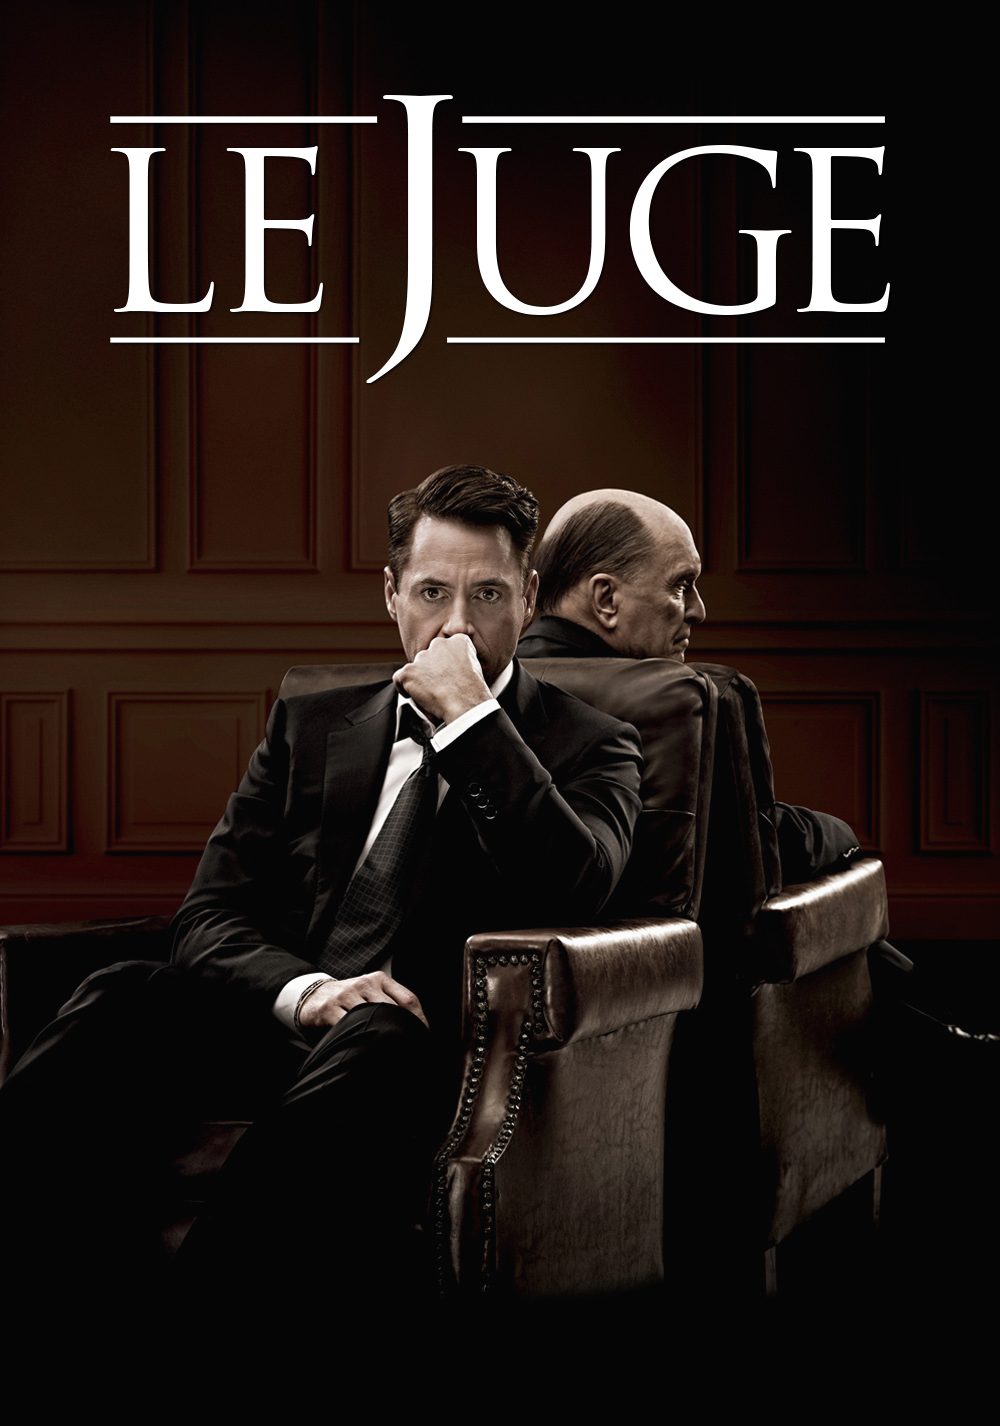 The Judge (2014 film) - Wikipedia